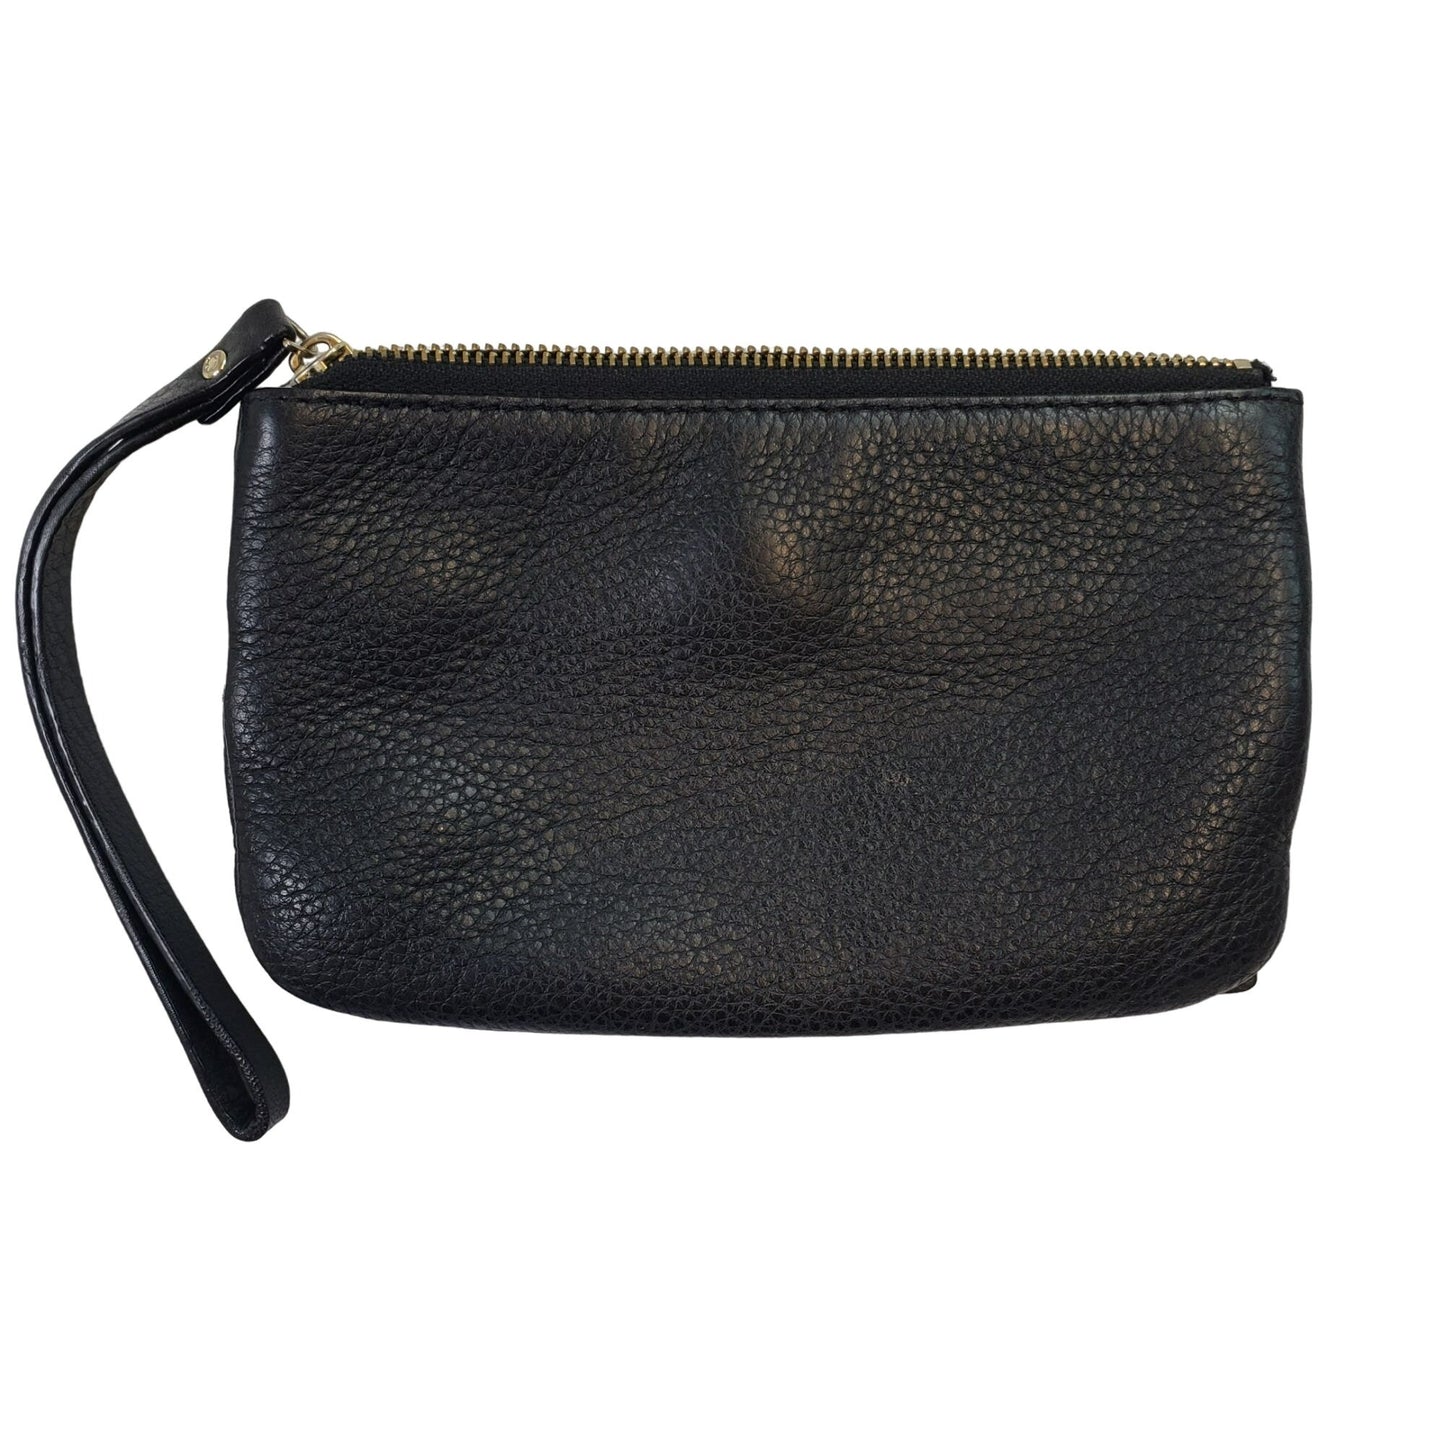 Kate Spade Black Pebble Leather Wristlet Wallet